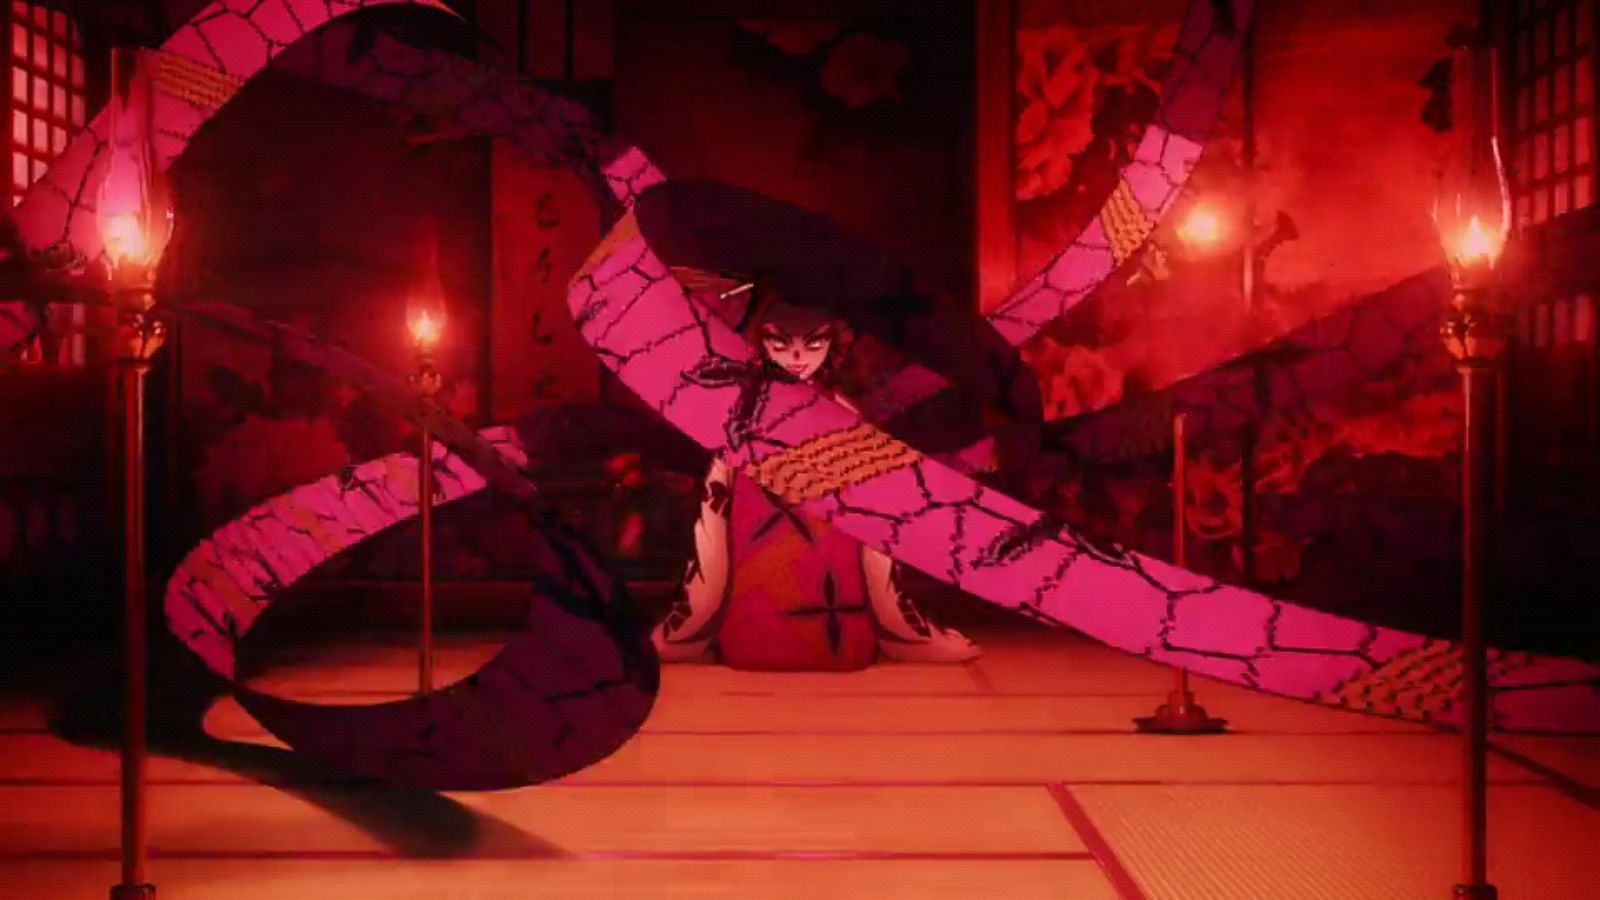 Daki attacks with her geisha outfit in Demon Slayer Season 2 (Image via Funimation)